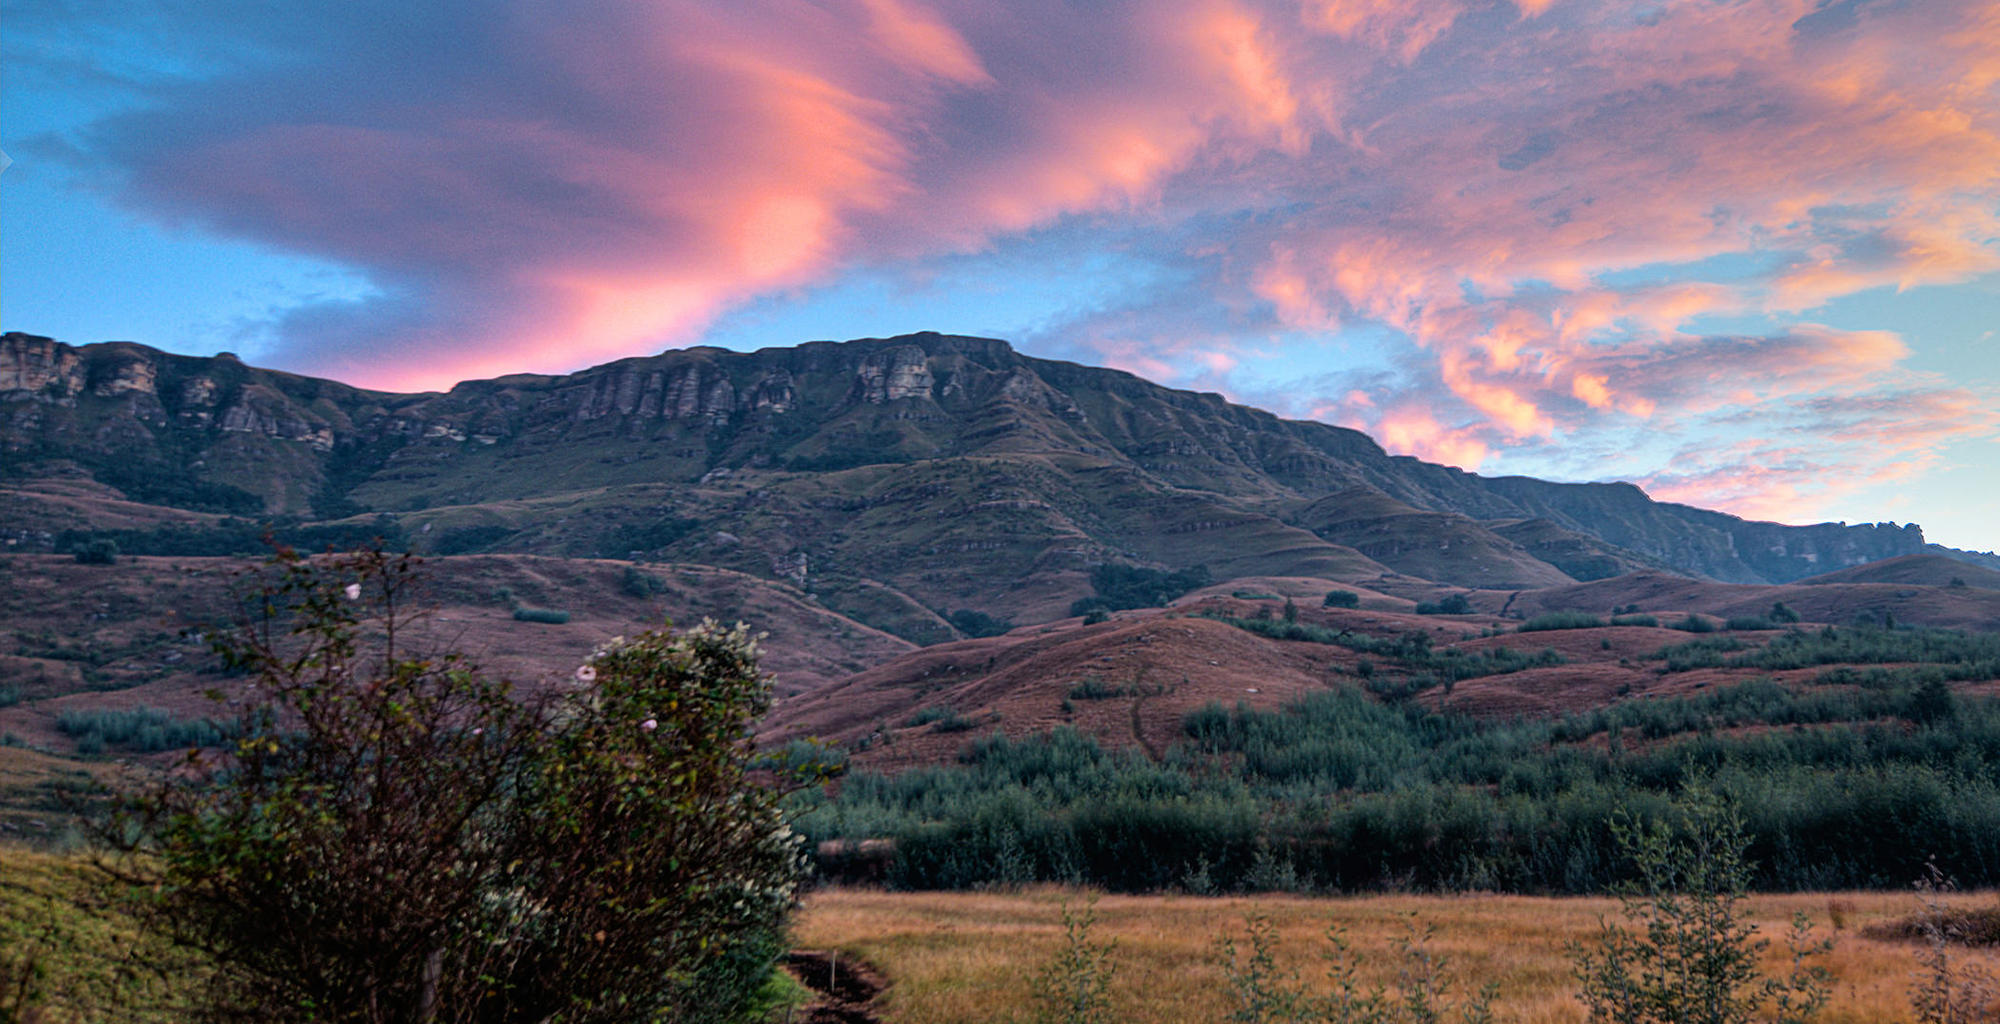 South-Africa-Cleopatra-Mountain-Farmhouse-Landscape-Sunset